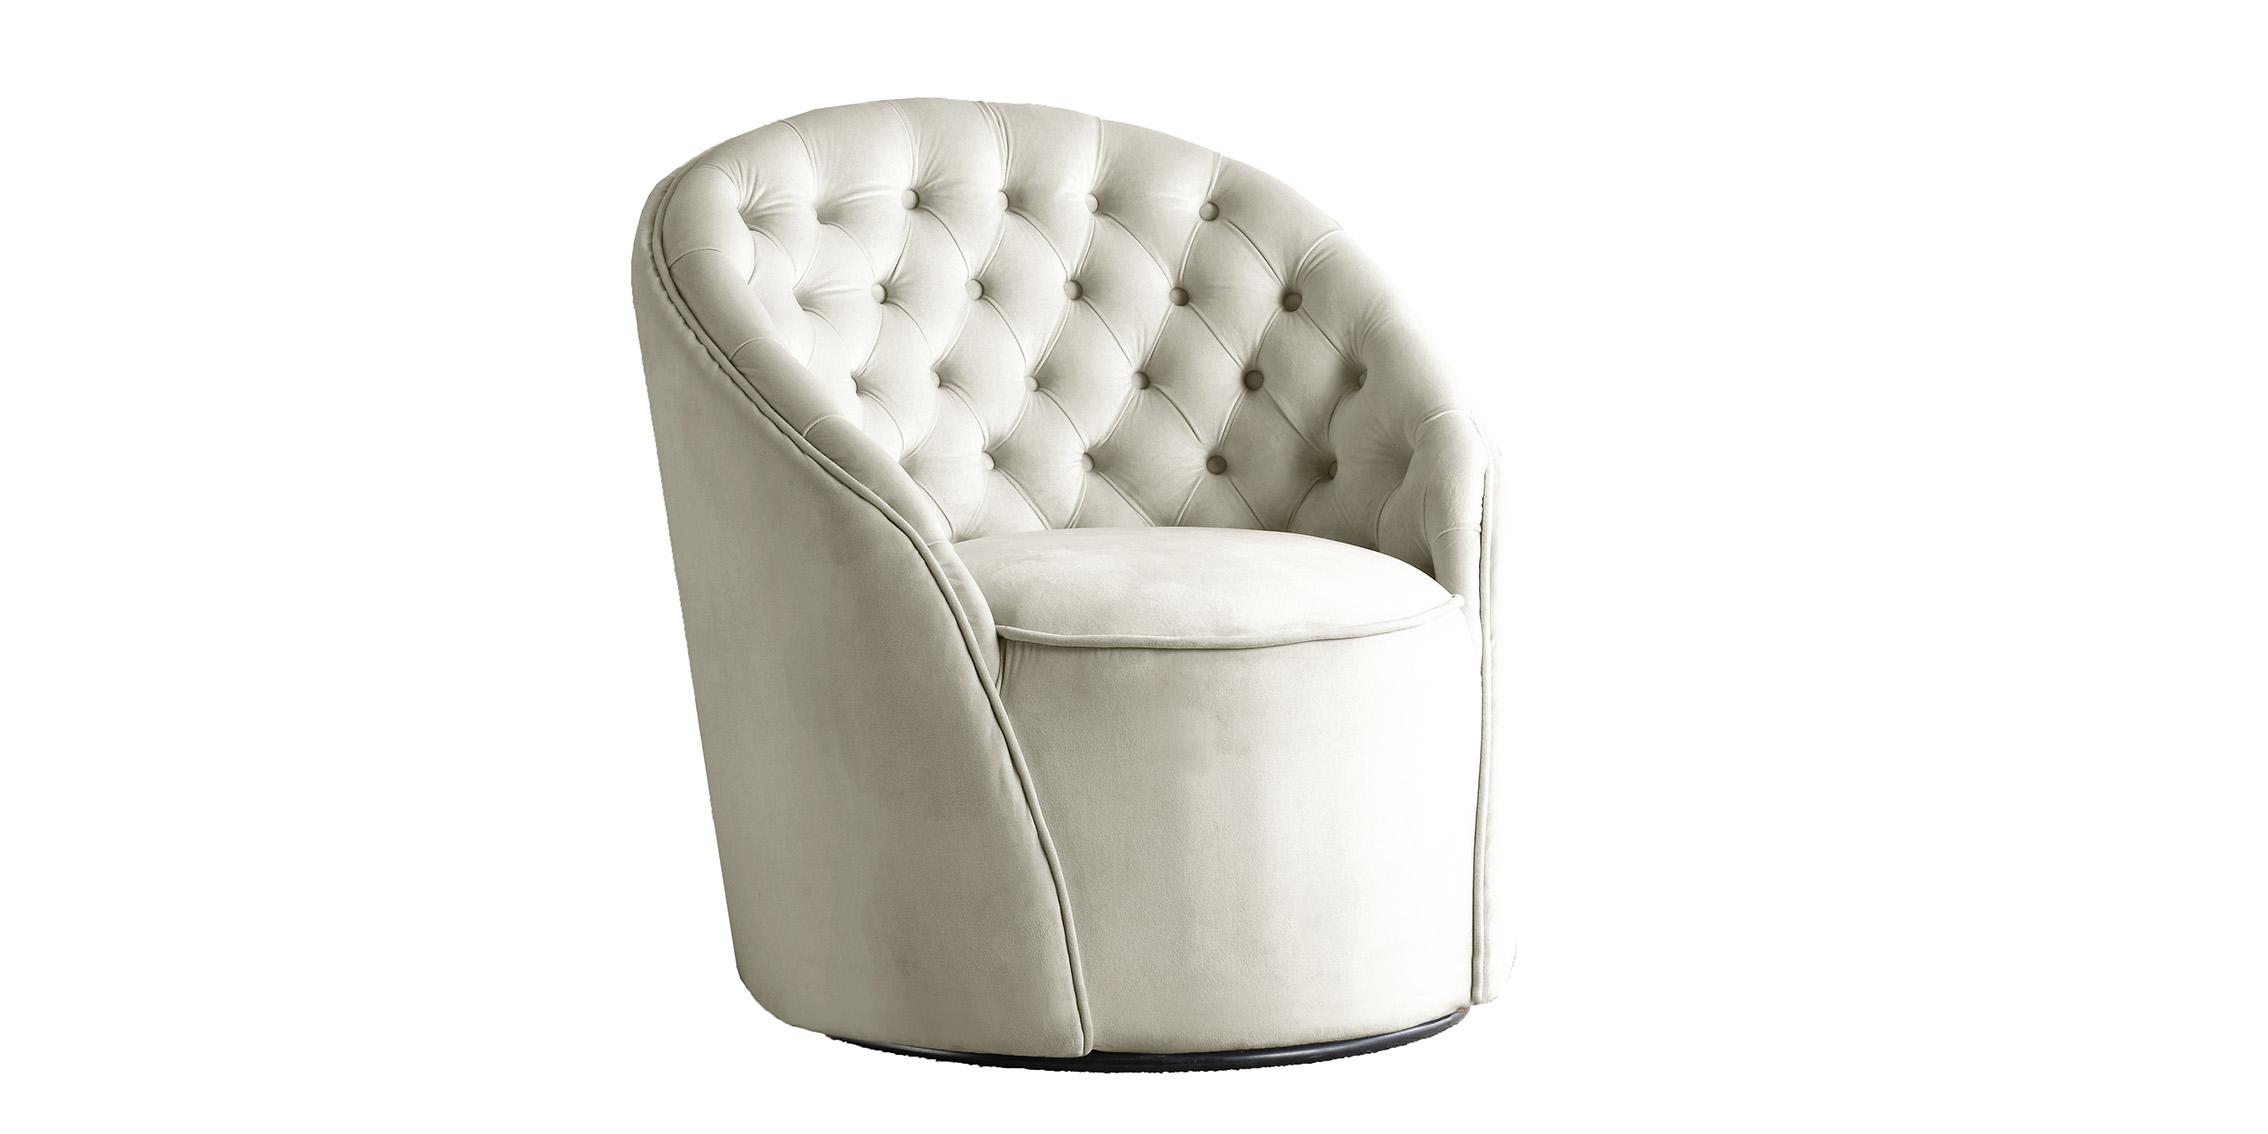 Contemporary, Modern Accent Chair ALESSIO 501Cream 501Cream in Cream Velvet